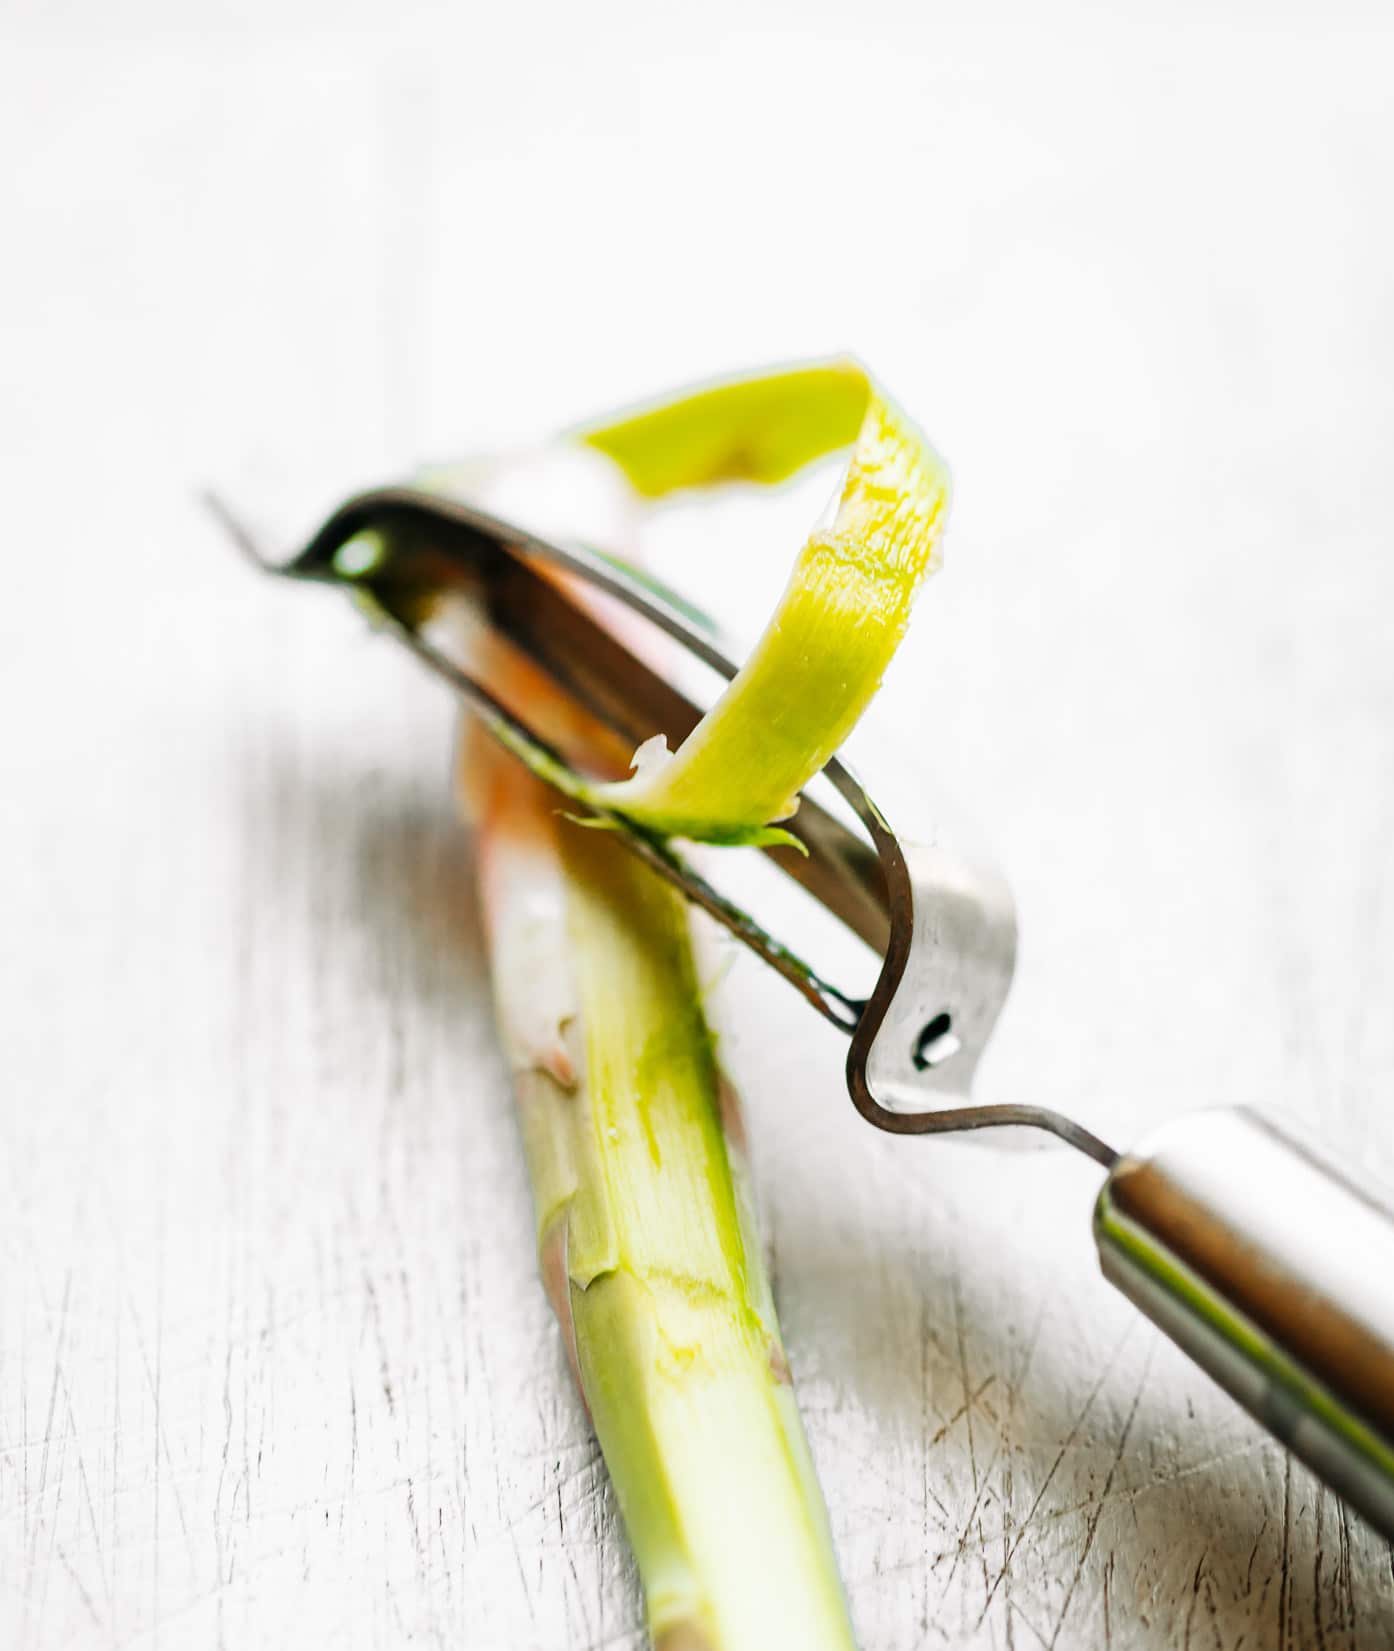 A potato peeling peeling an asparagus stalk.